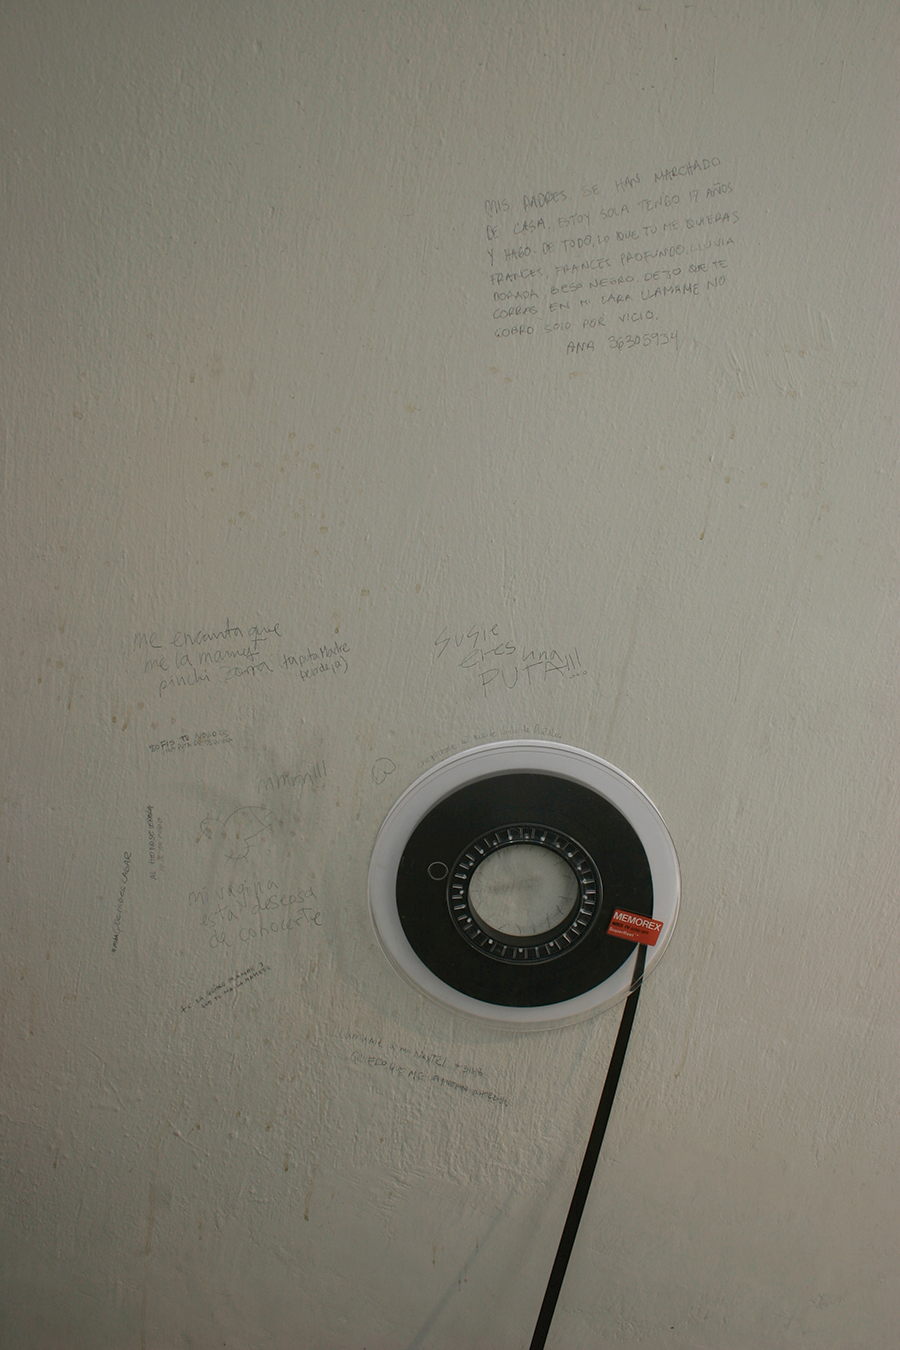 Pablo Lecuanda en colaboración sobre instalación de Alejandro Fournier, “Palabras” intervención, bolígrafo sobre muro, 15 x 5 cms., 2005